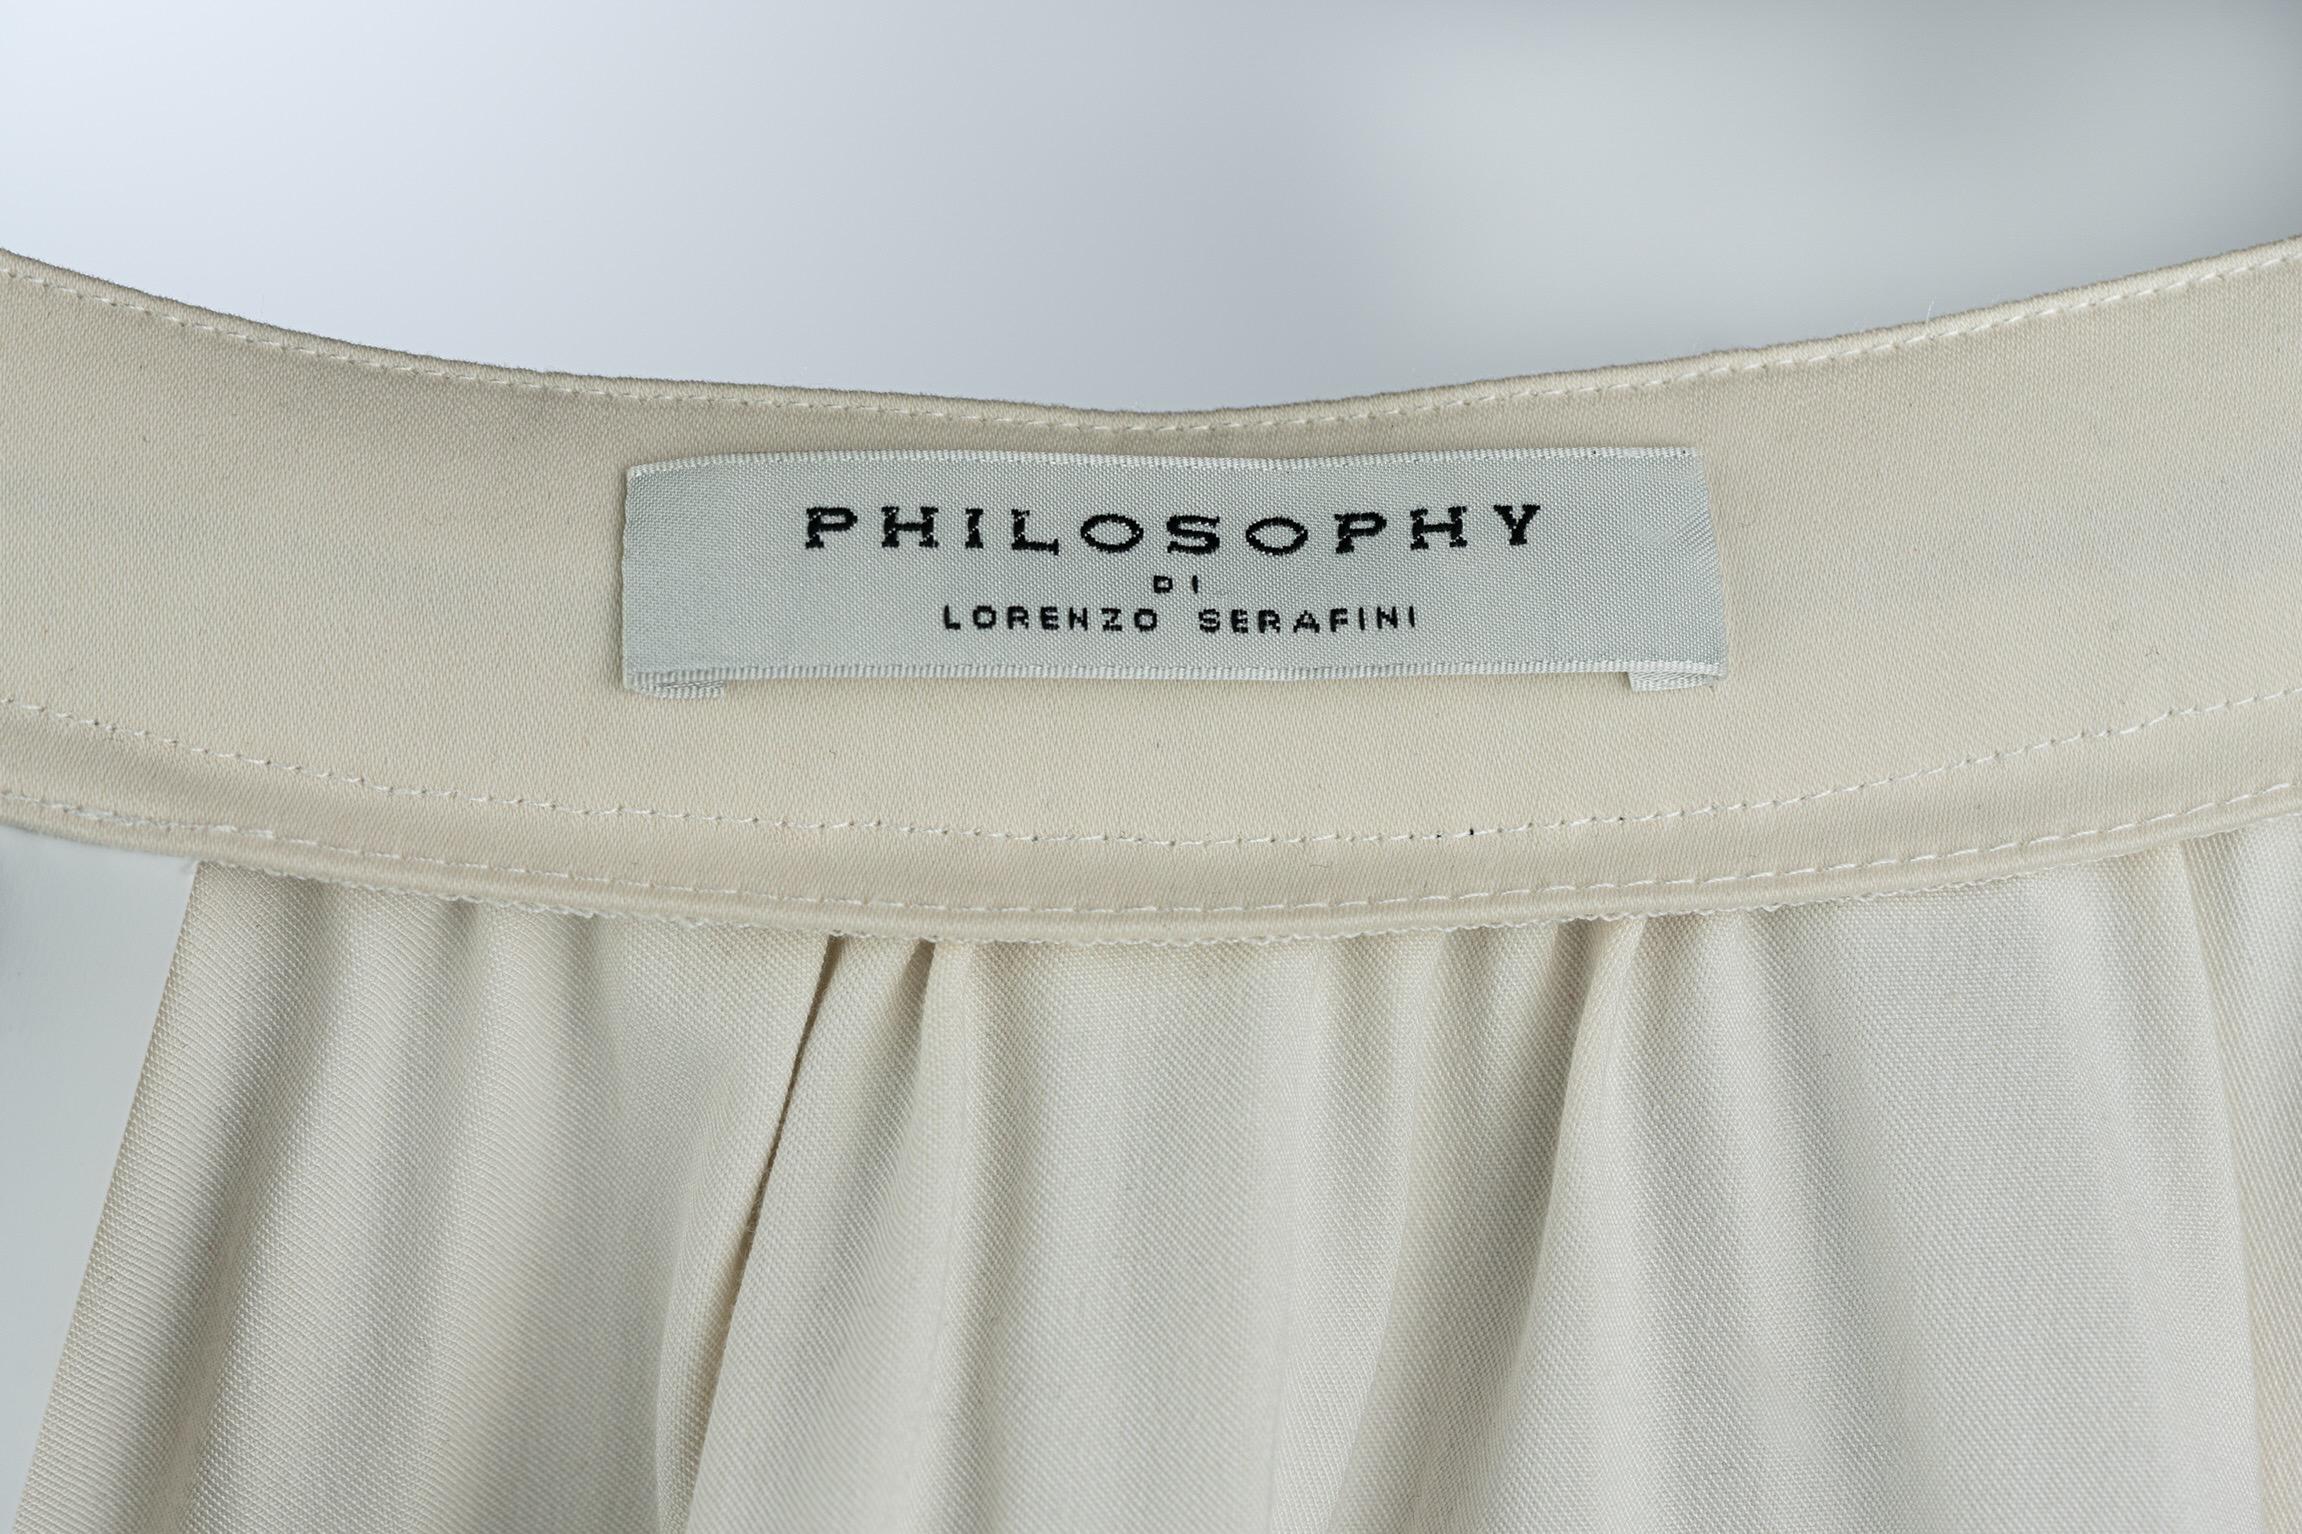 Black Philosophy FW 2017 Ready to Wear plissé skirt by Lorenzo Serafini